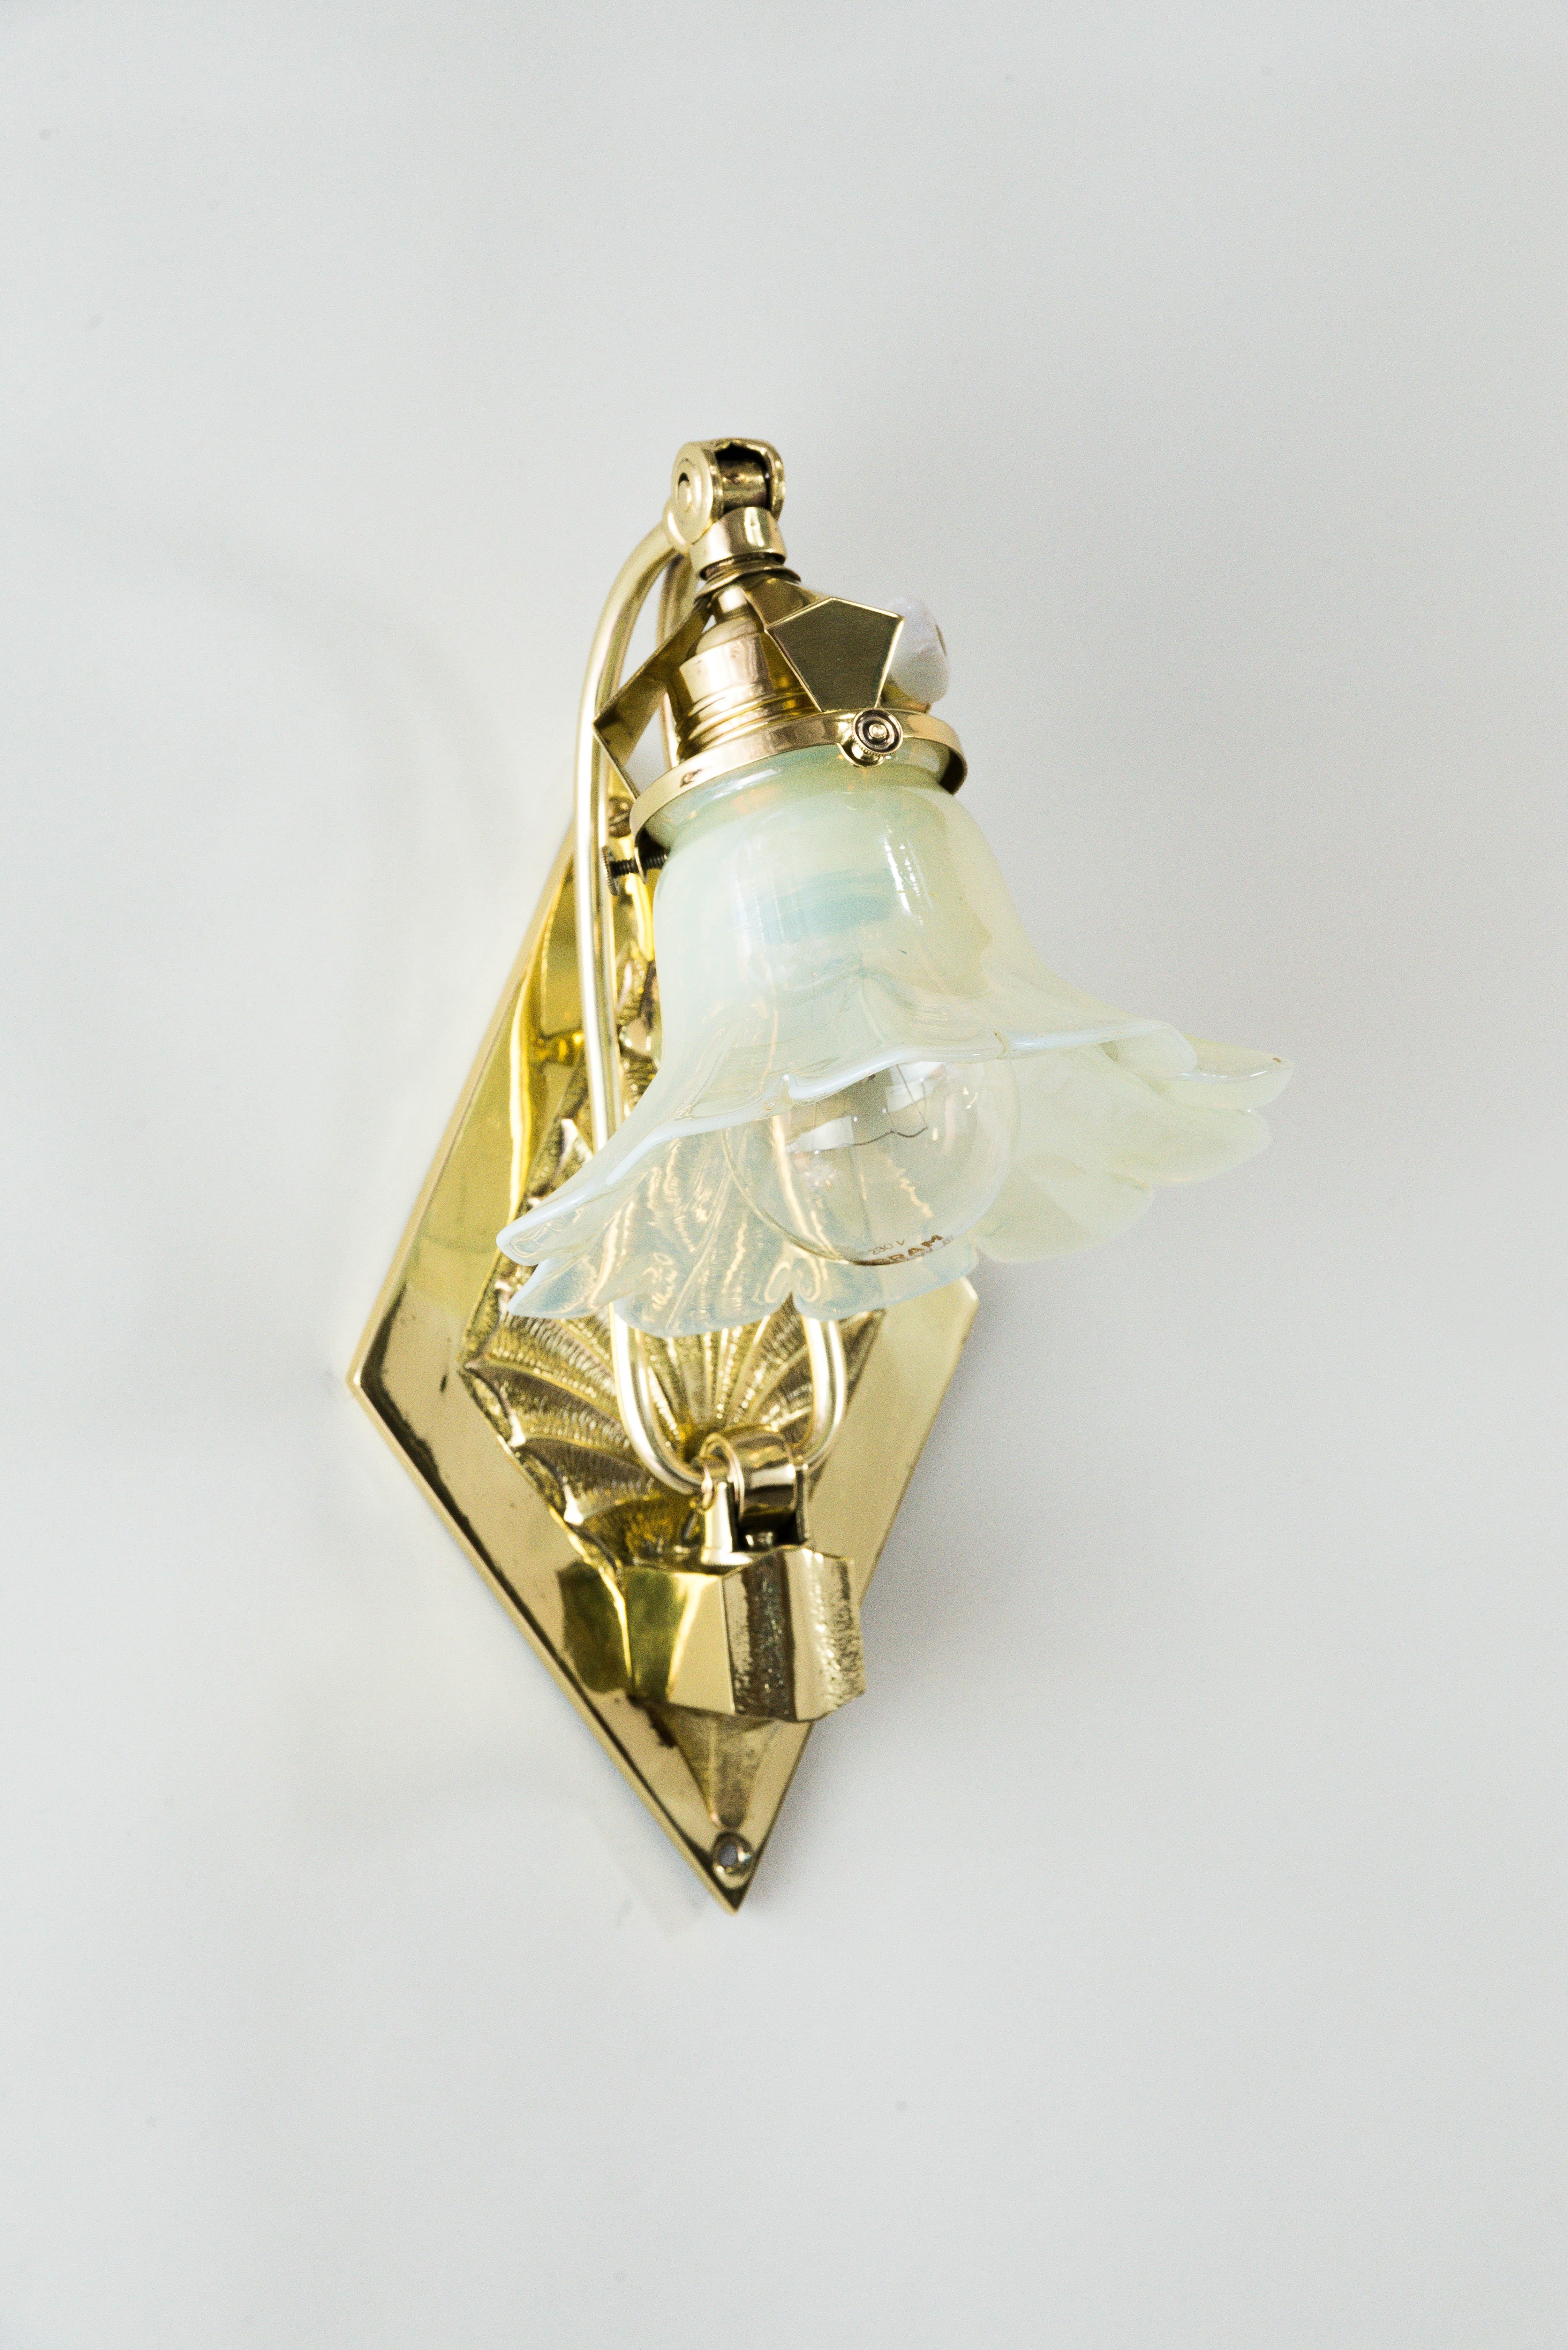 Austrian Adjustable Art Deco Wall Lamp circa 1920s with Opaline Glass Shade